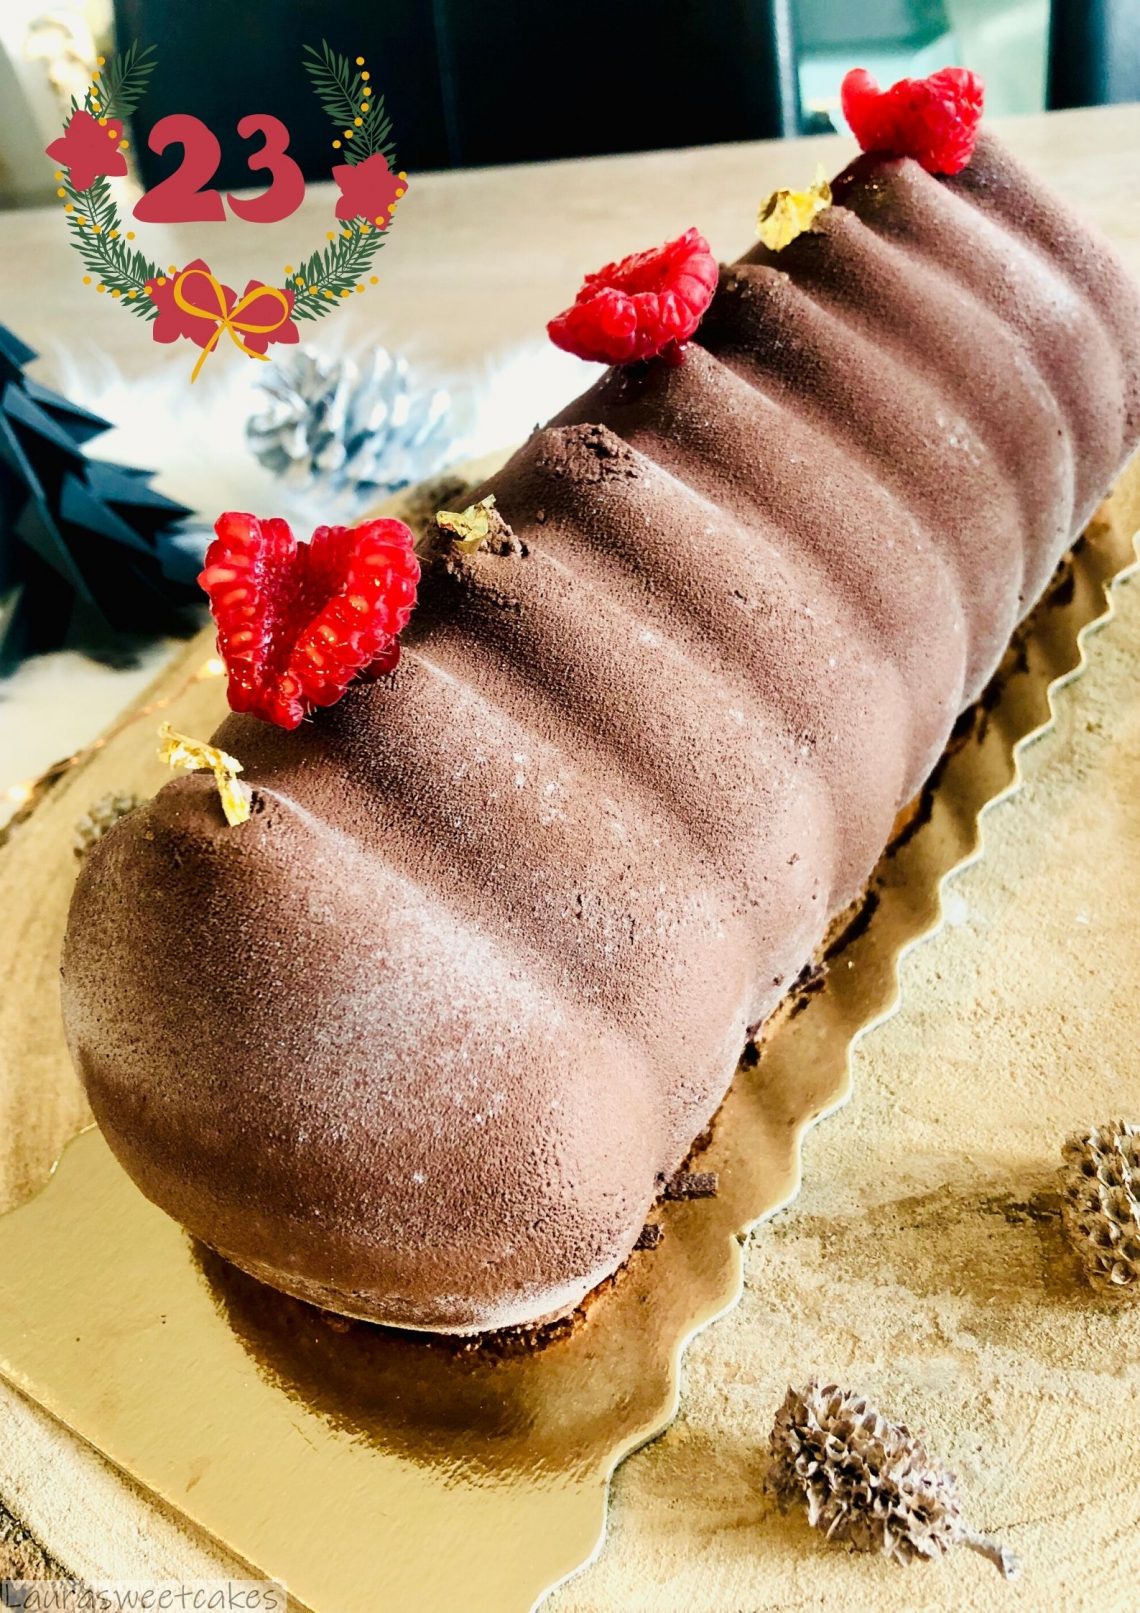 BUCHE FACON FORET NOIRE - LAURA SWEET CAKES